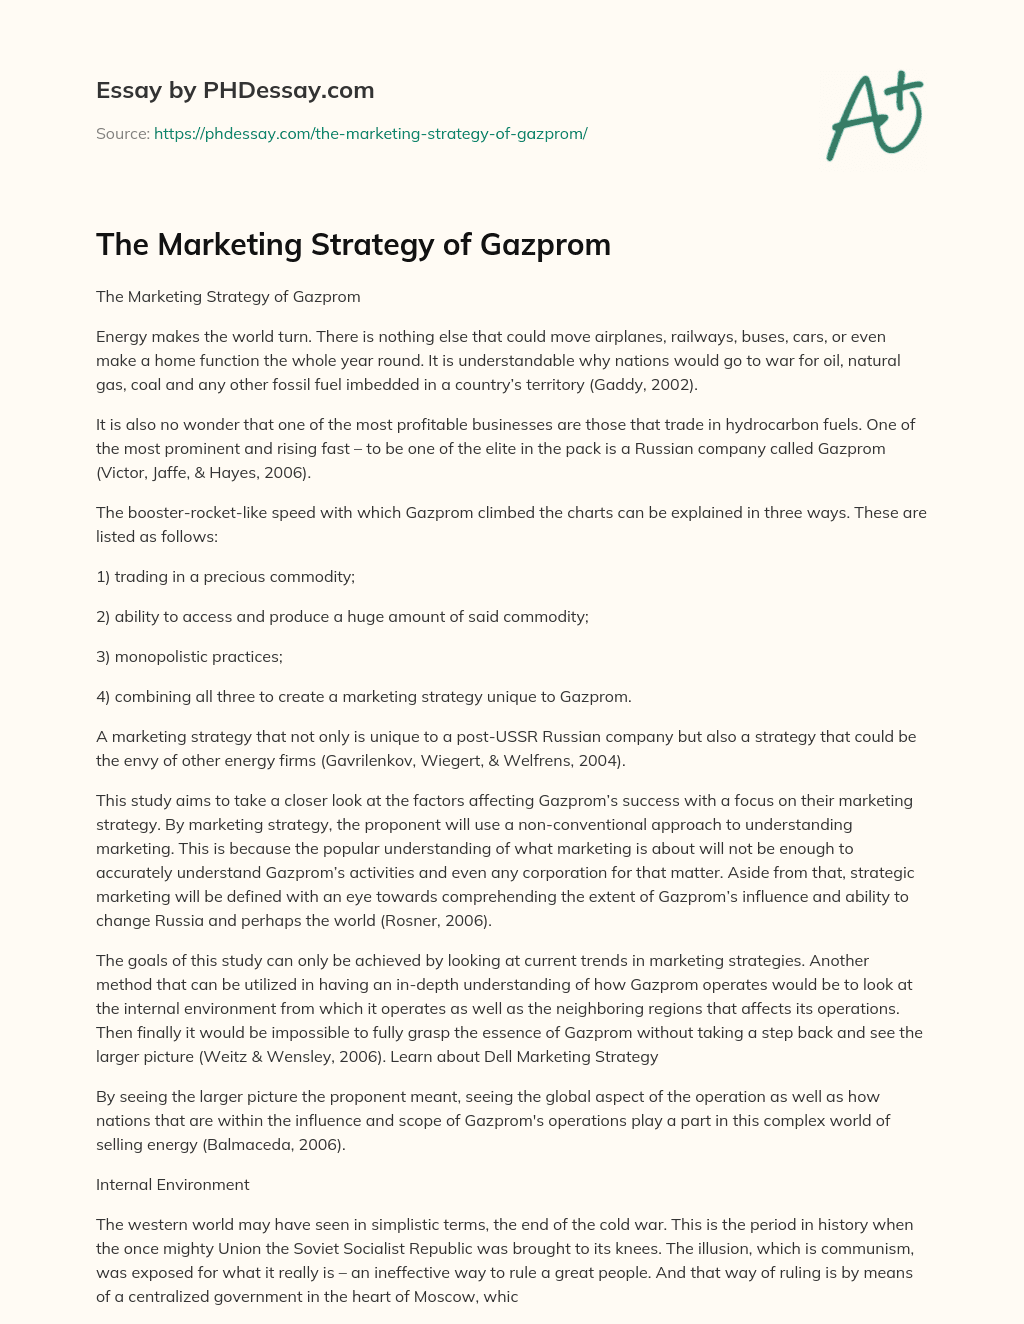 The Marketing Strategy of Gazprom essay